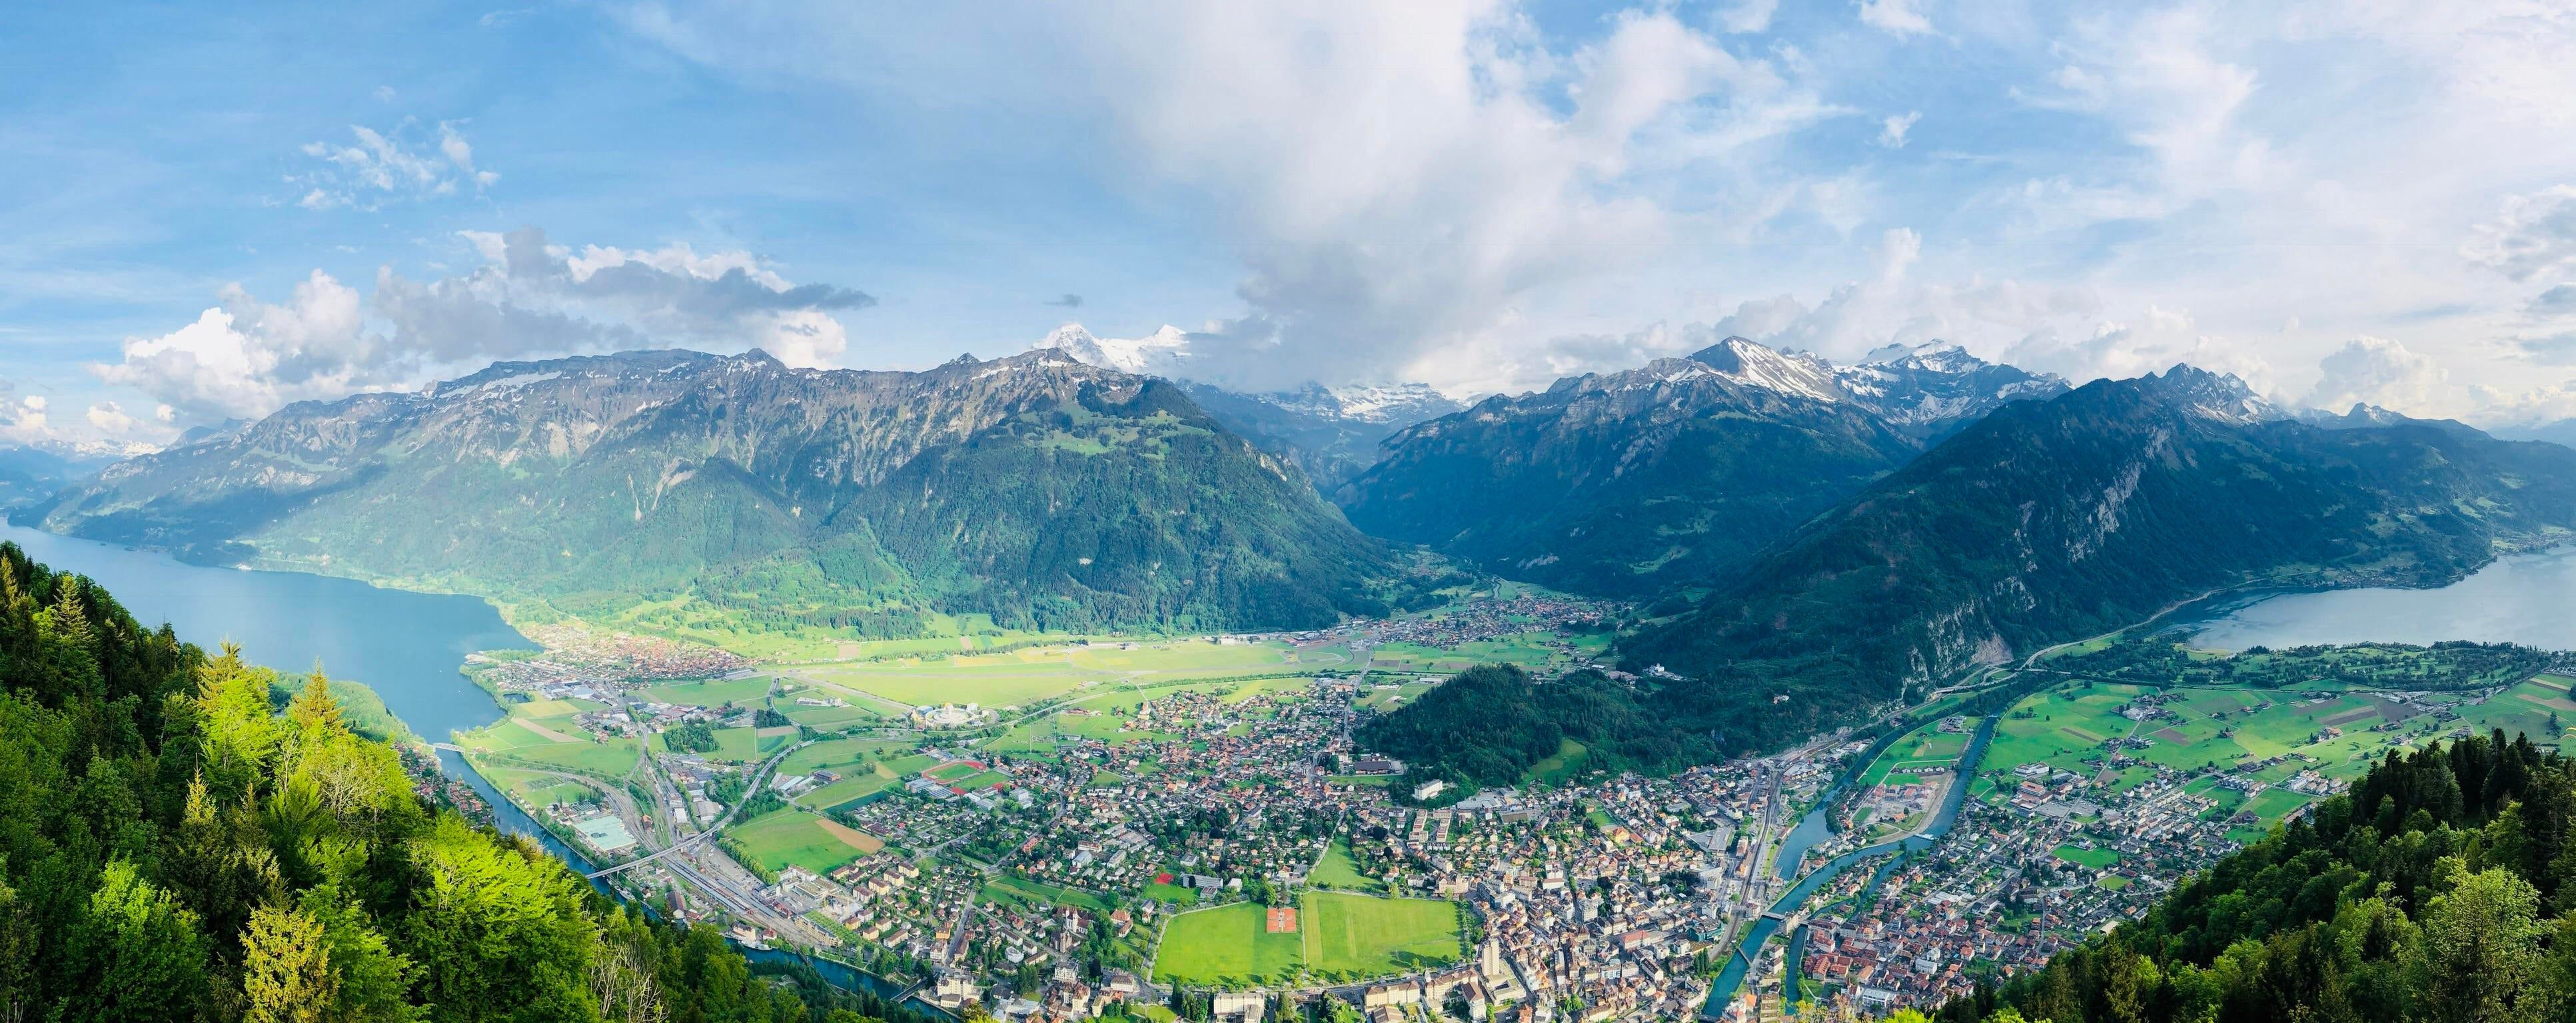 best Interlaken Switzerland image on Pholder. Earth Porn, Travel and Pics